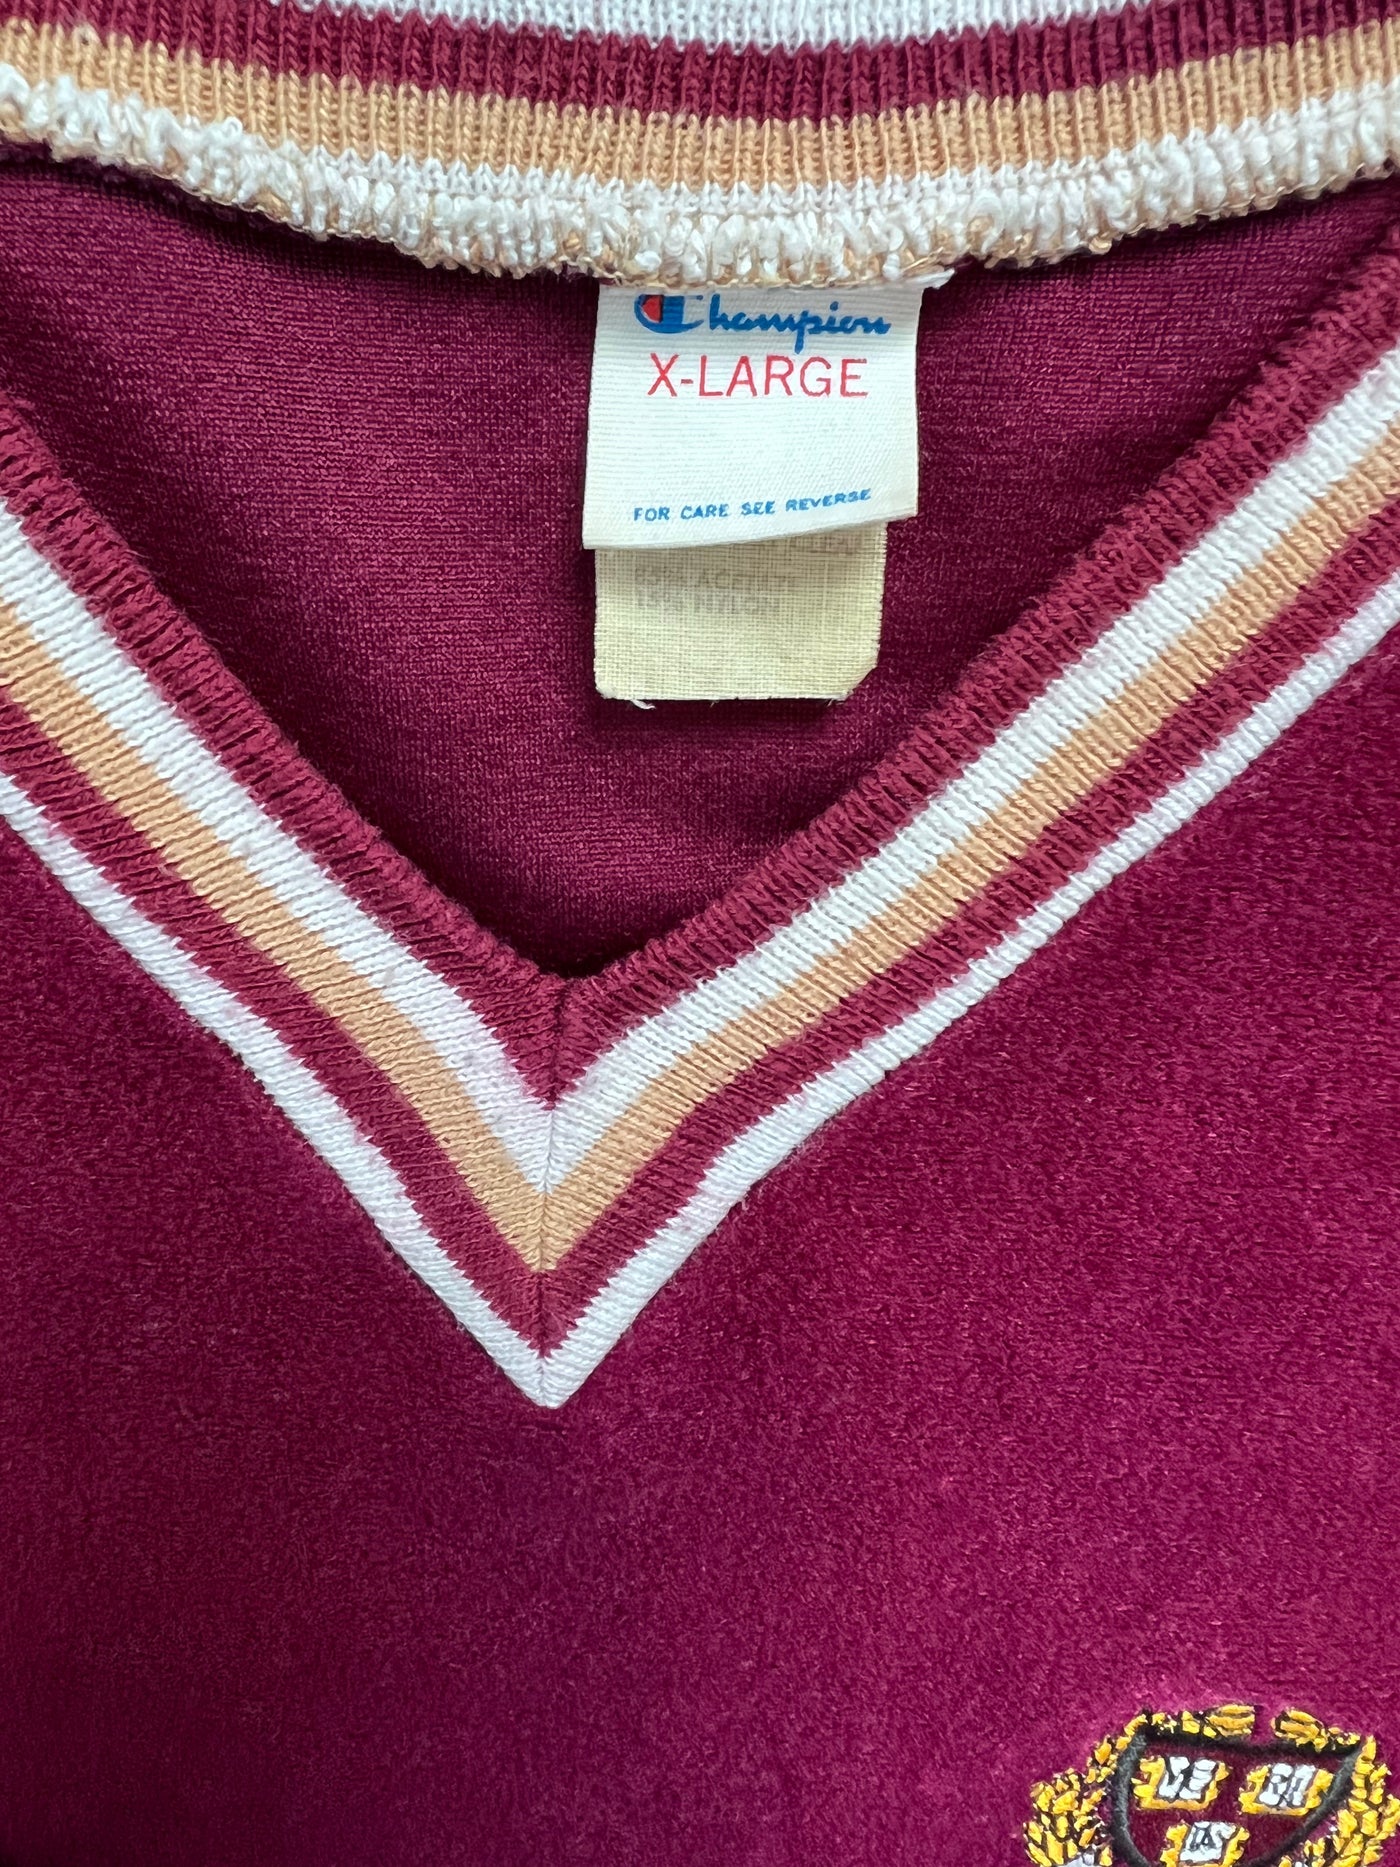 Rare Vintage Harvard Champion Sweatshirt 70's-80's